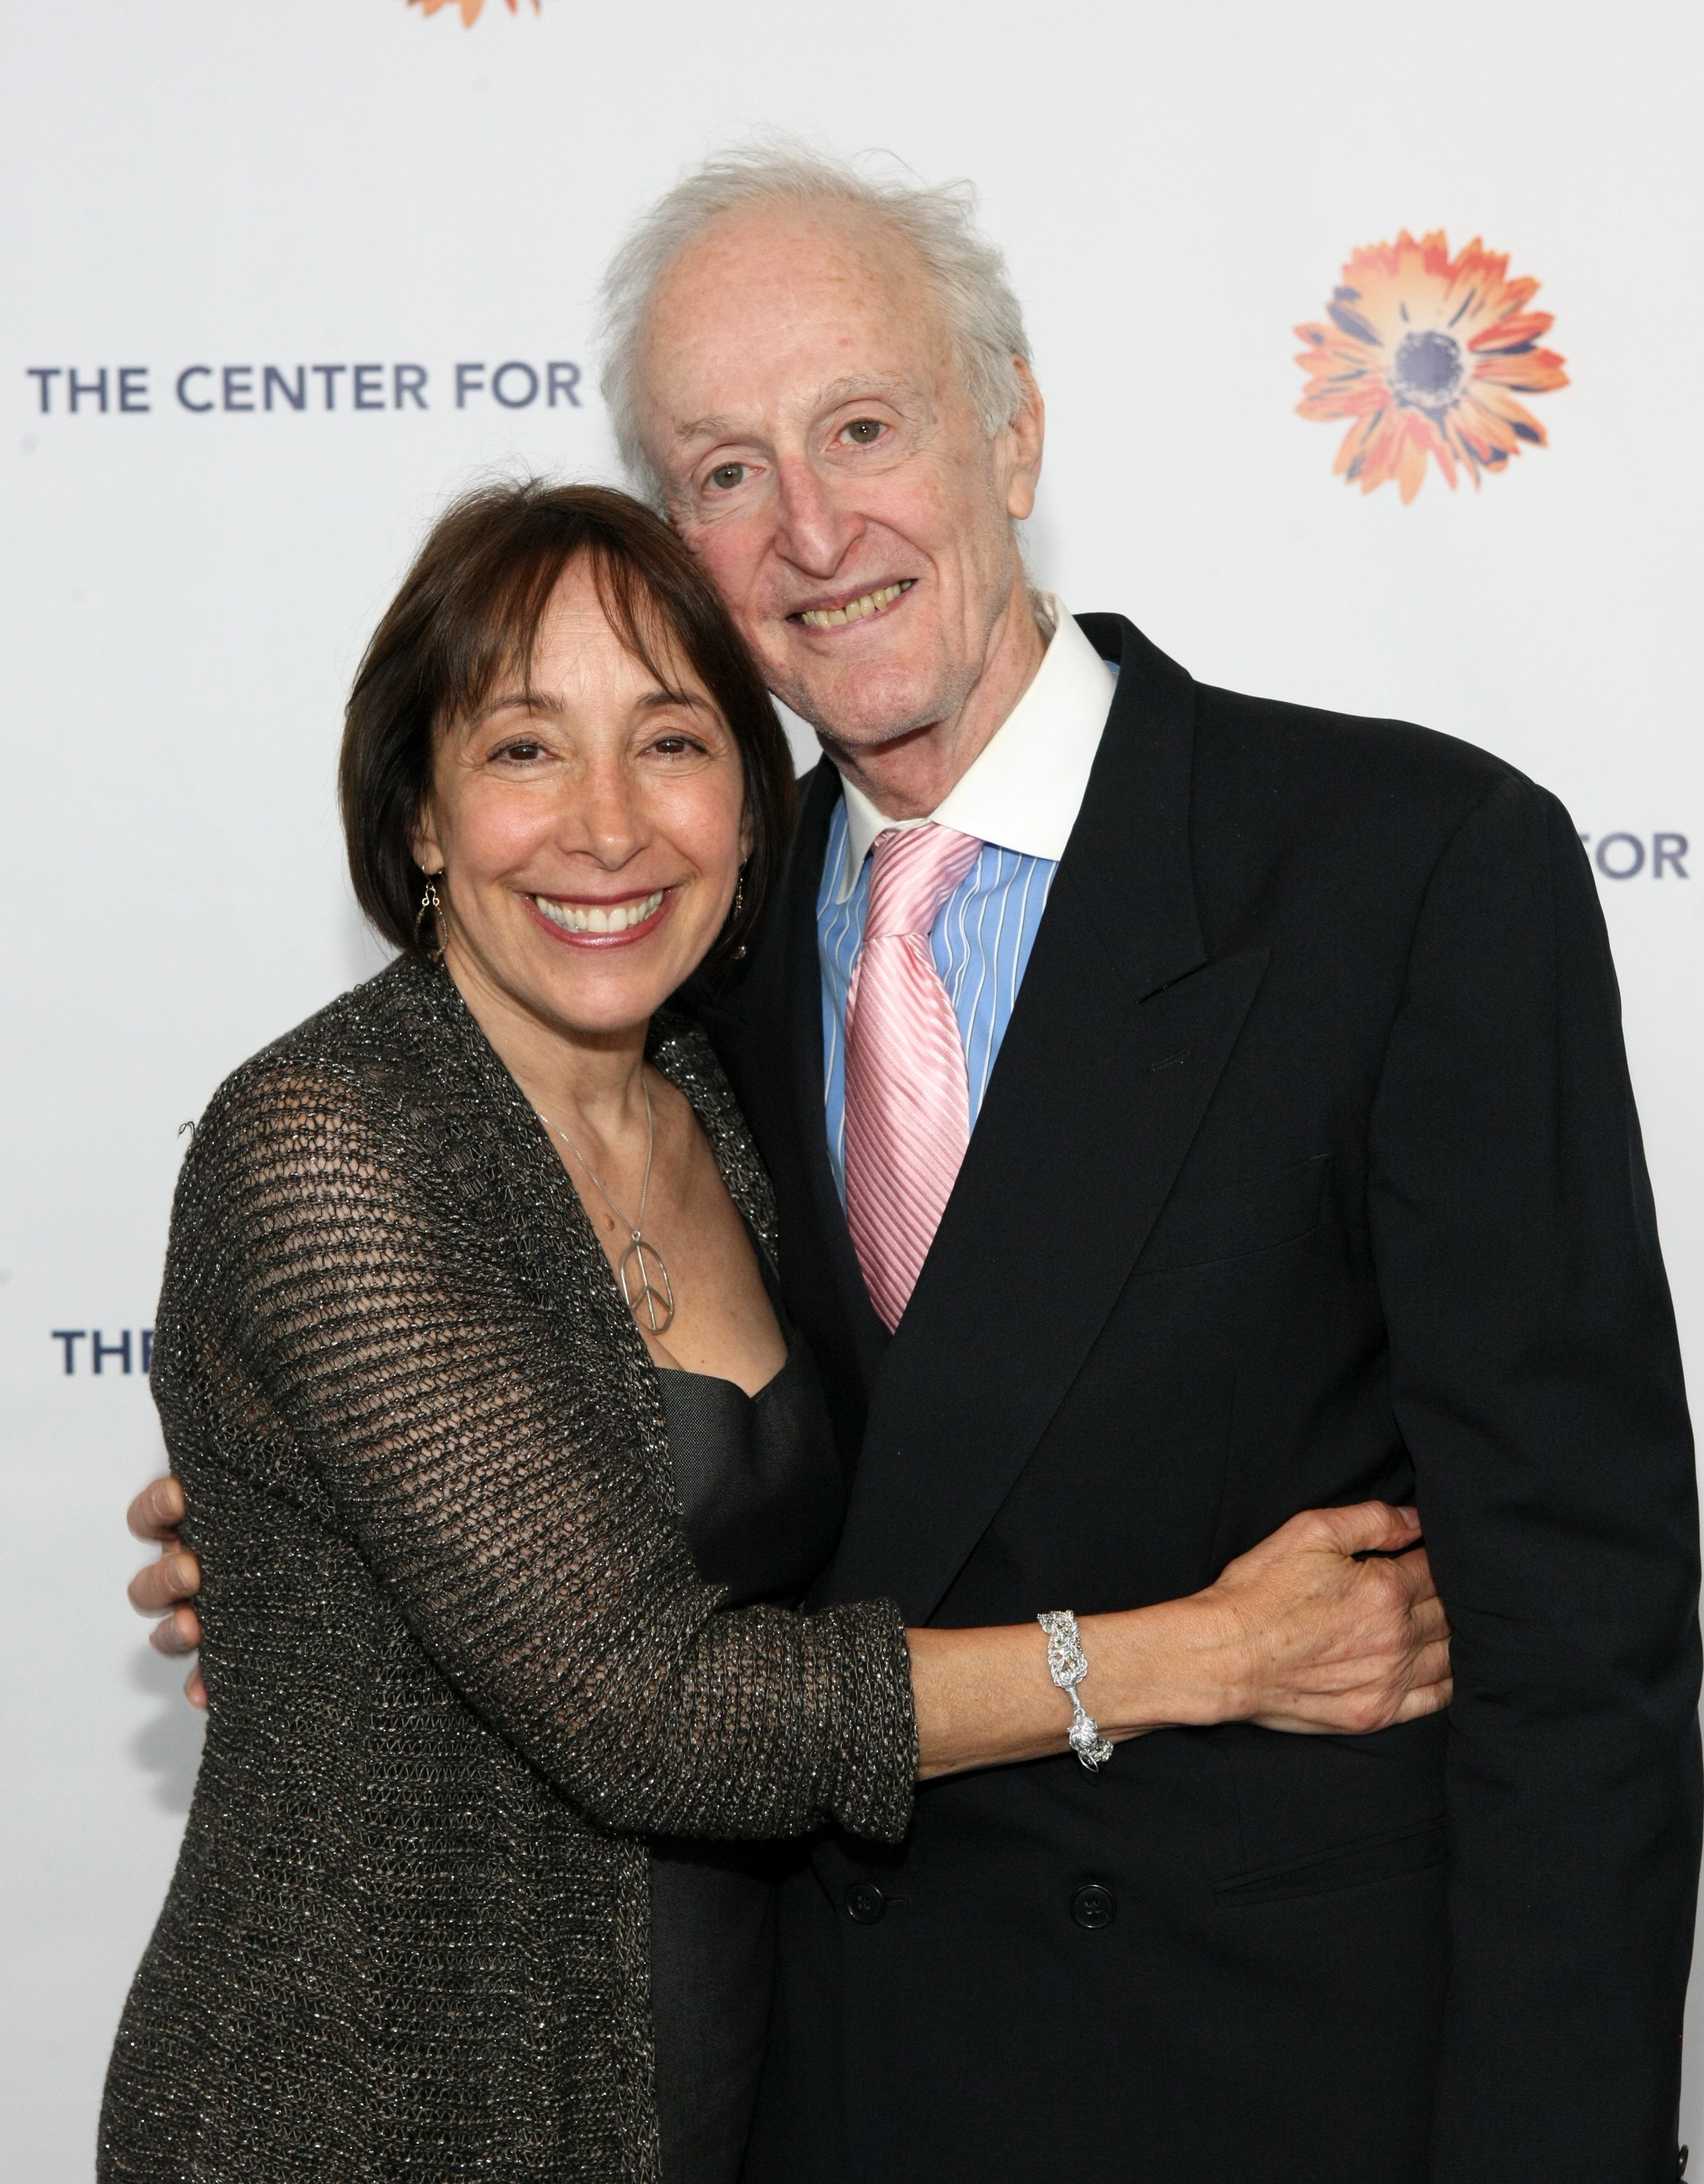 Didi Conn et son mari David Shire lors du gala "Evening Of Discovery" le 15 mai 2012, à New York | Source : Getty Images